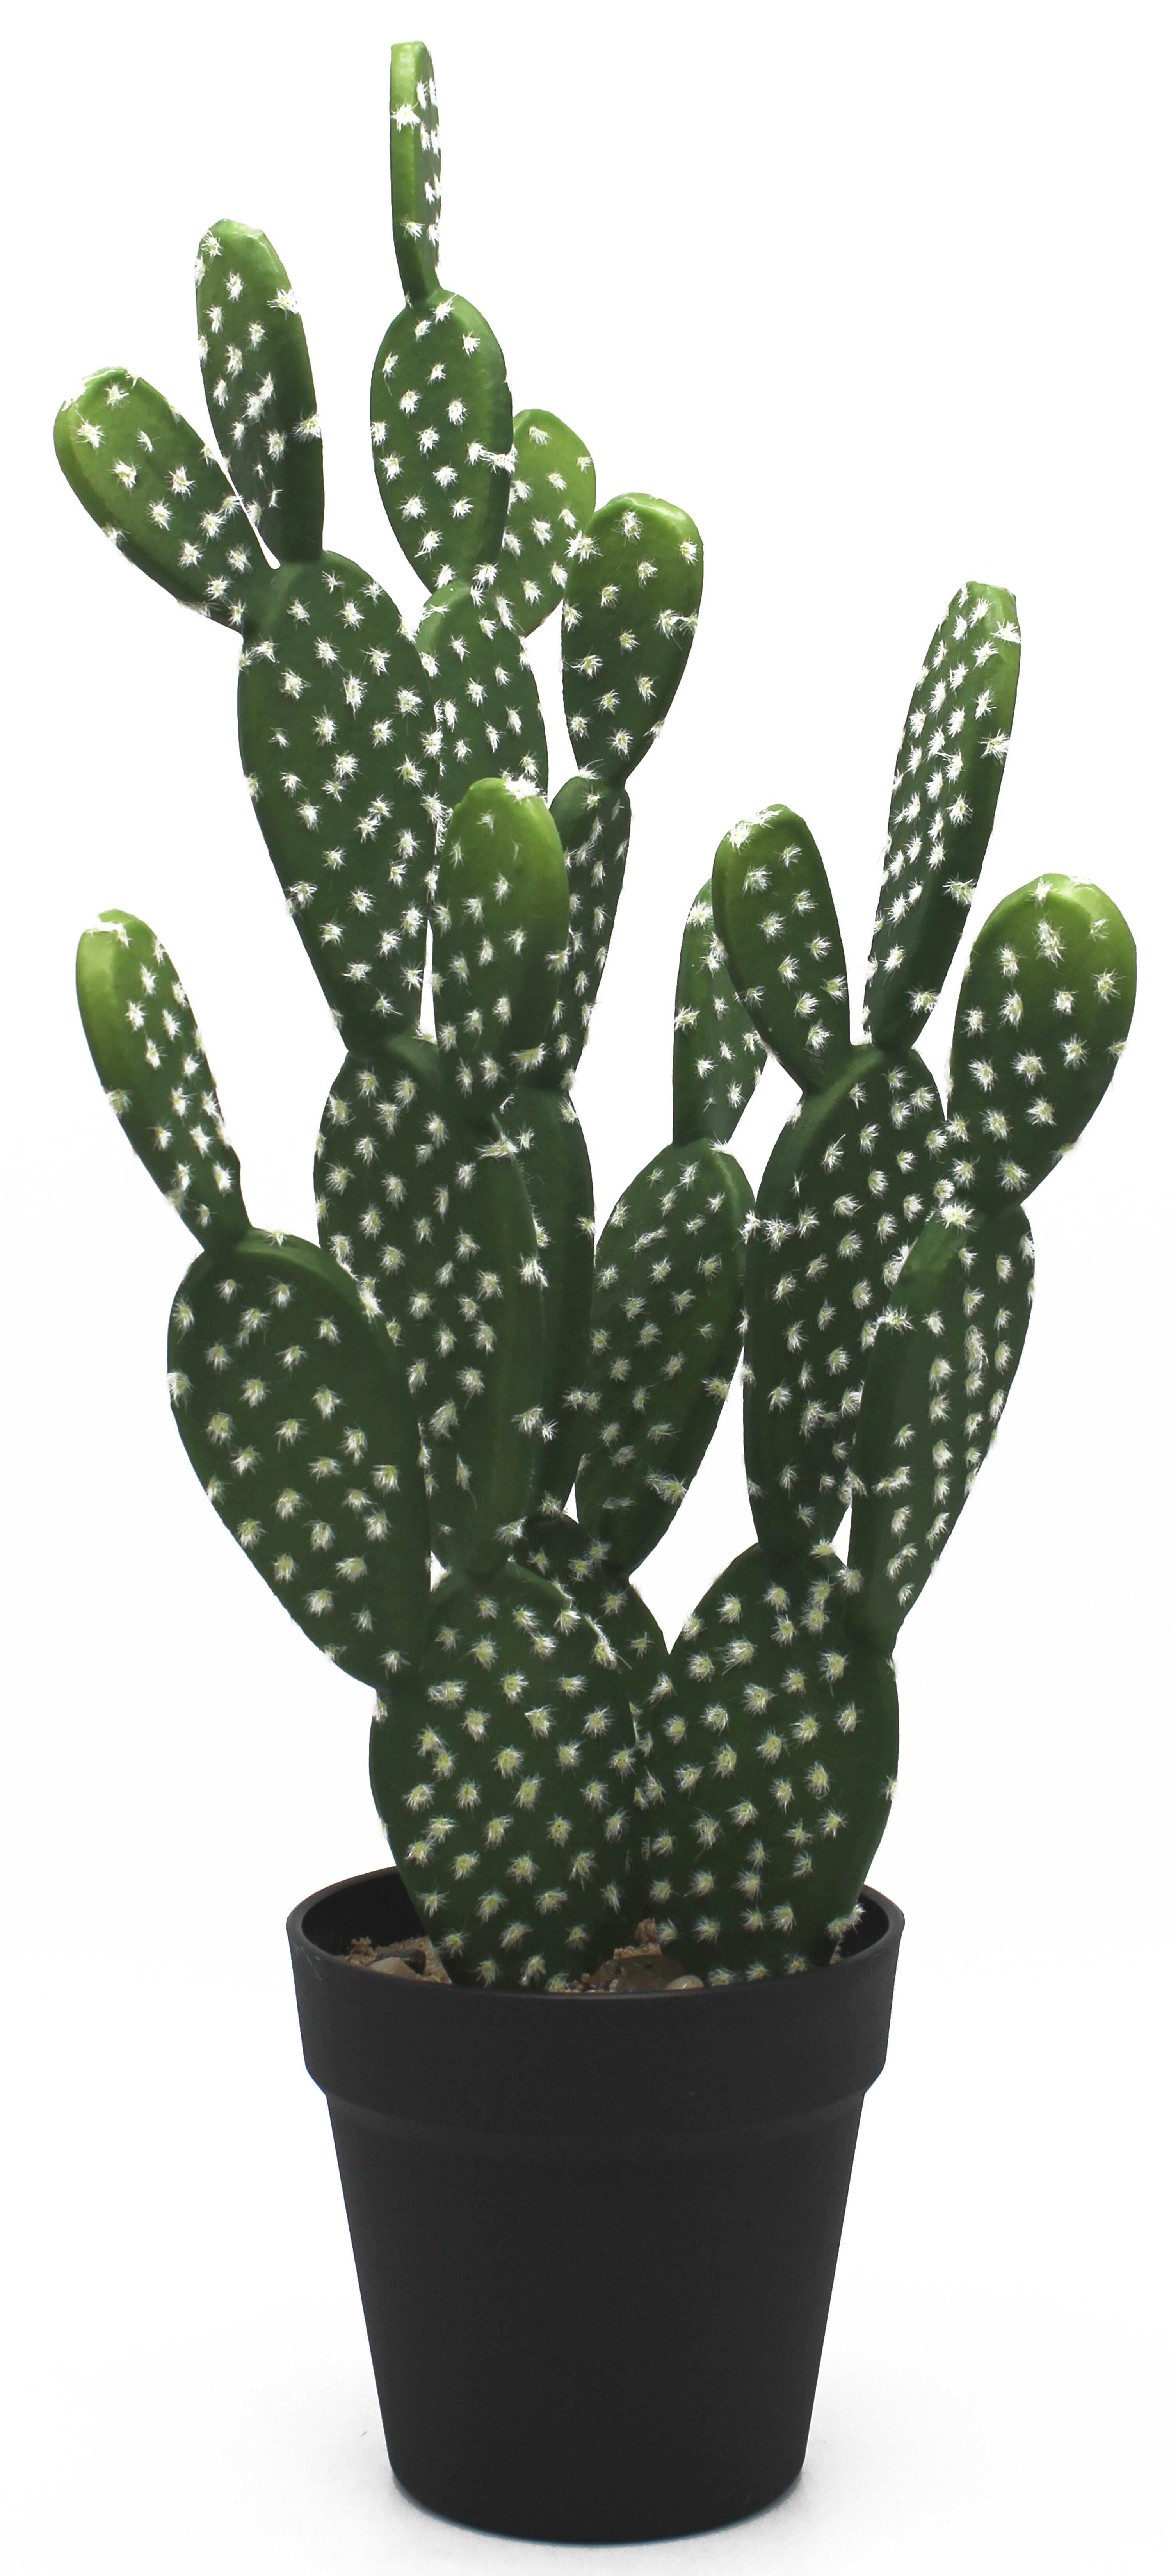 Planta artificial cactus de 55 cm de altura en maceta de 14 cm